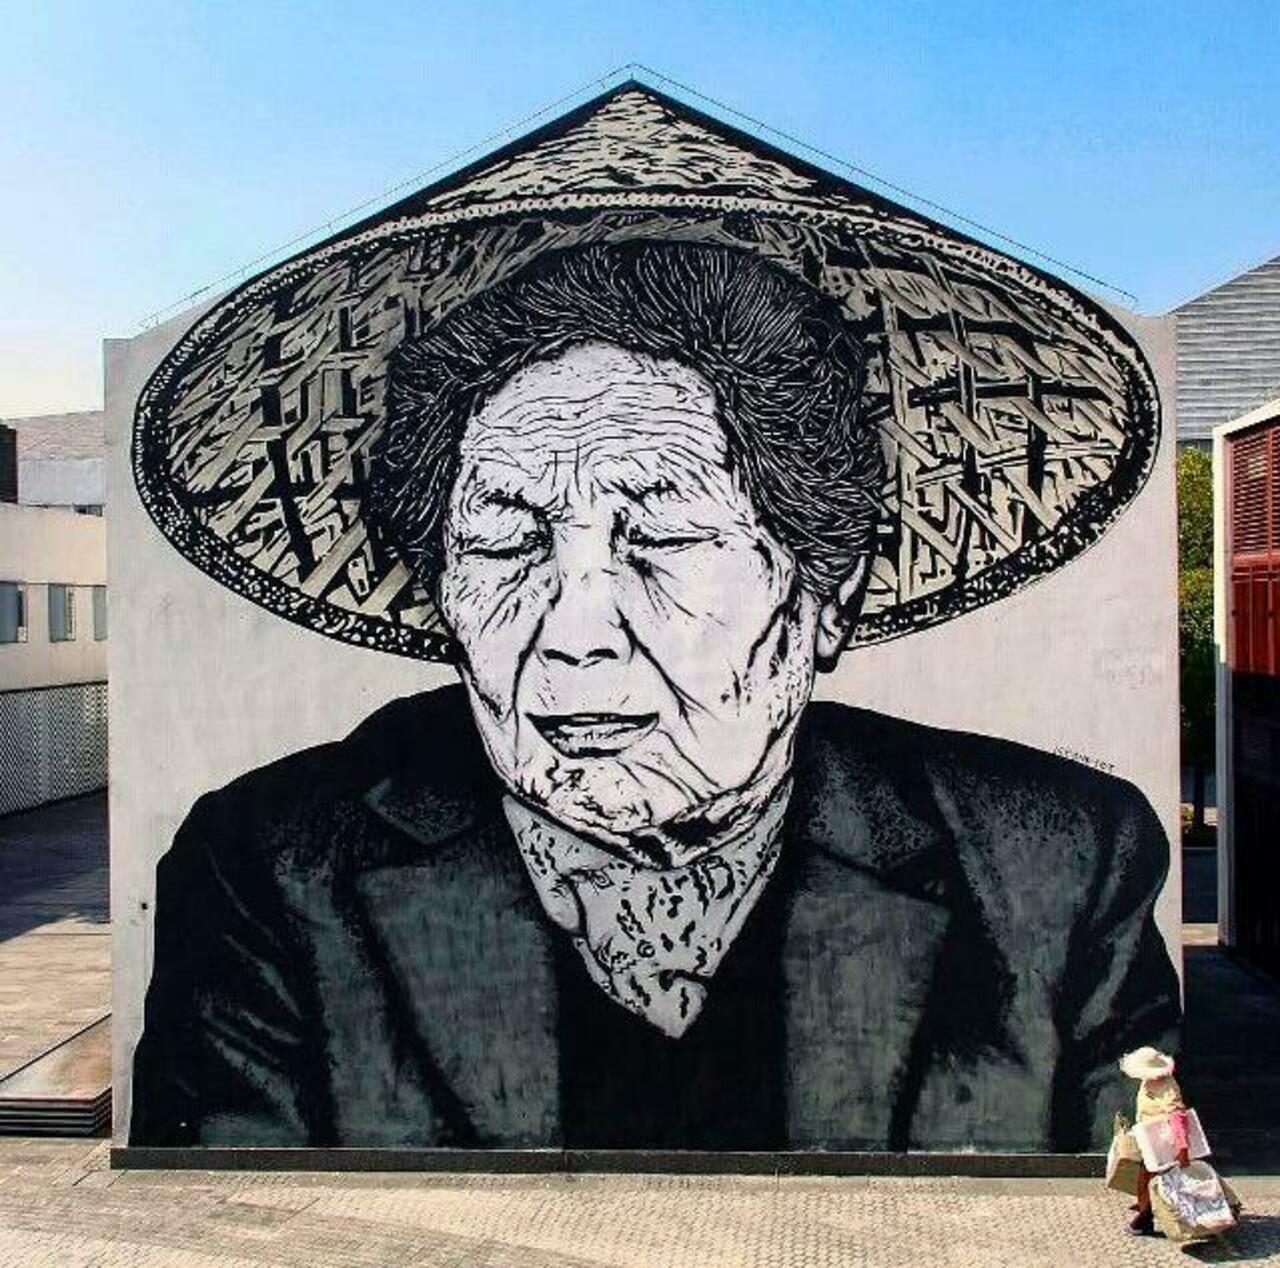 New Street Art by icy&sot in Shanghai  

#art #graffiti #mural #streetart http://t.co/maQl0FaNgn